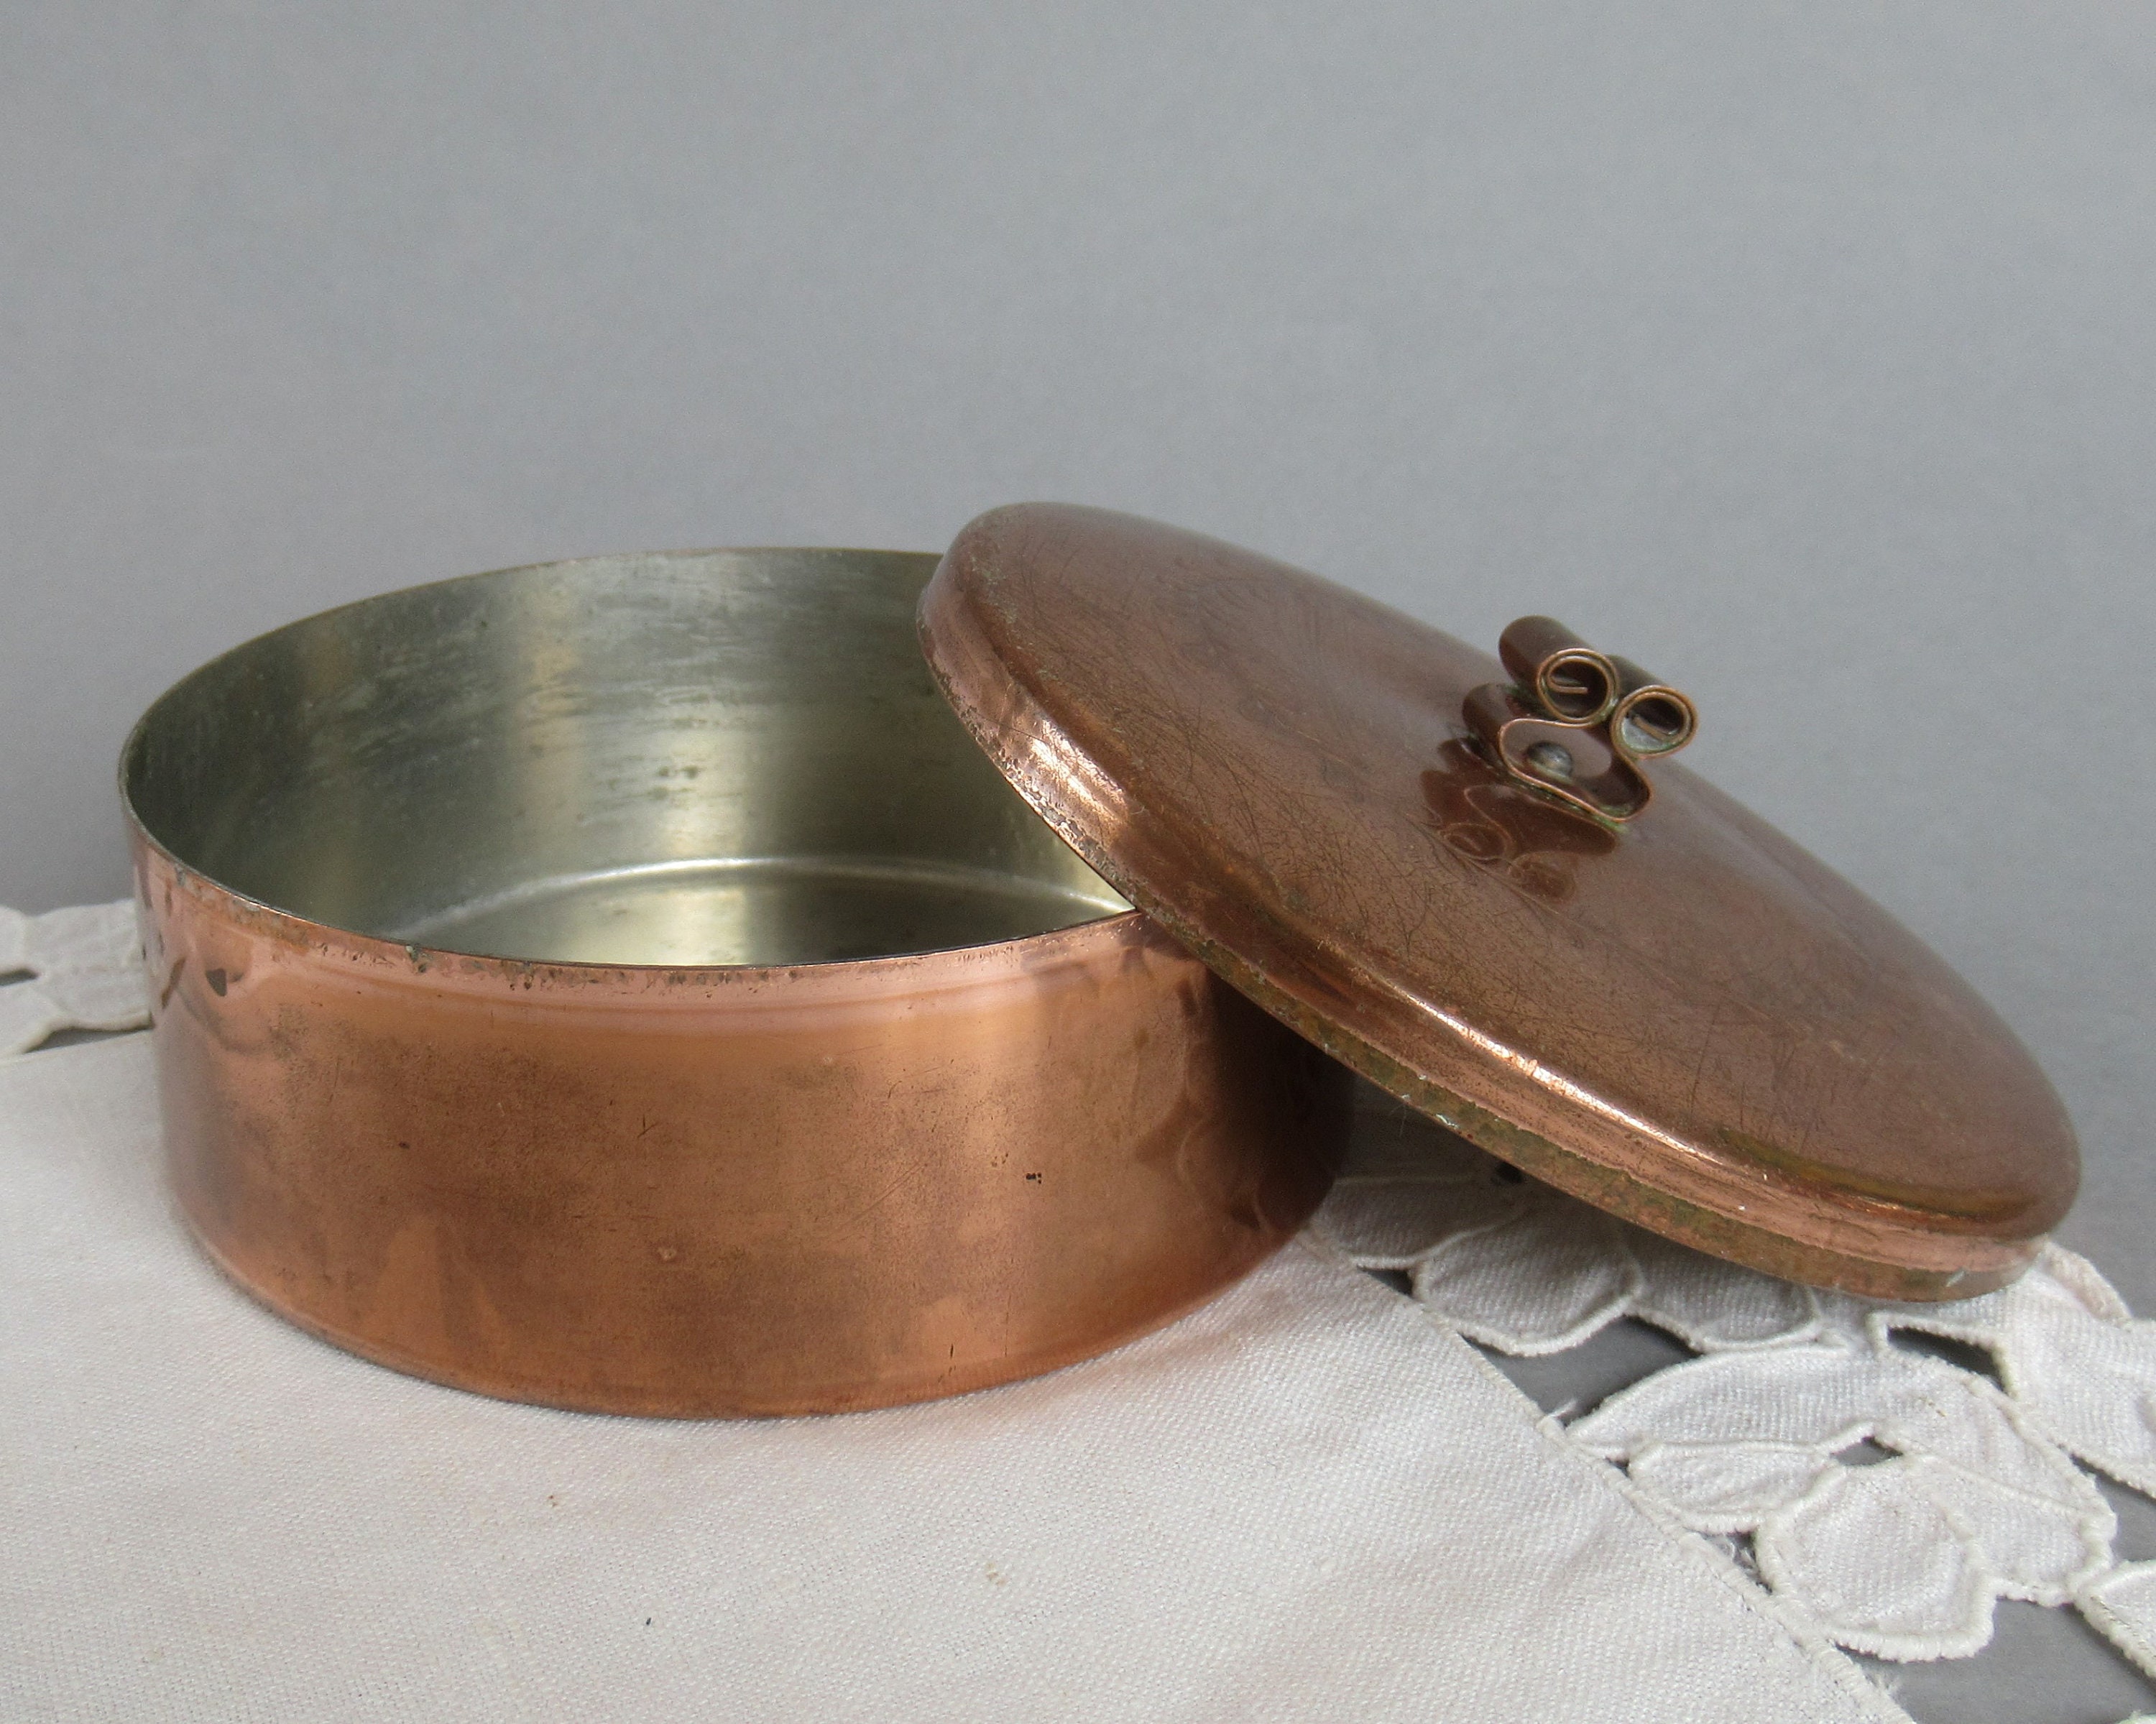 Fogcroll Jewelry Organizer Box Antique Imitation Copper Latch